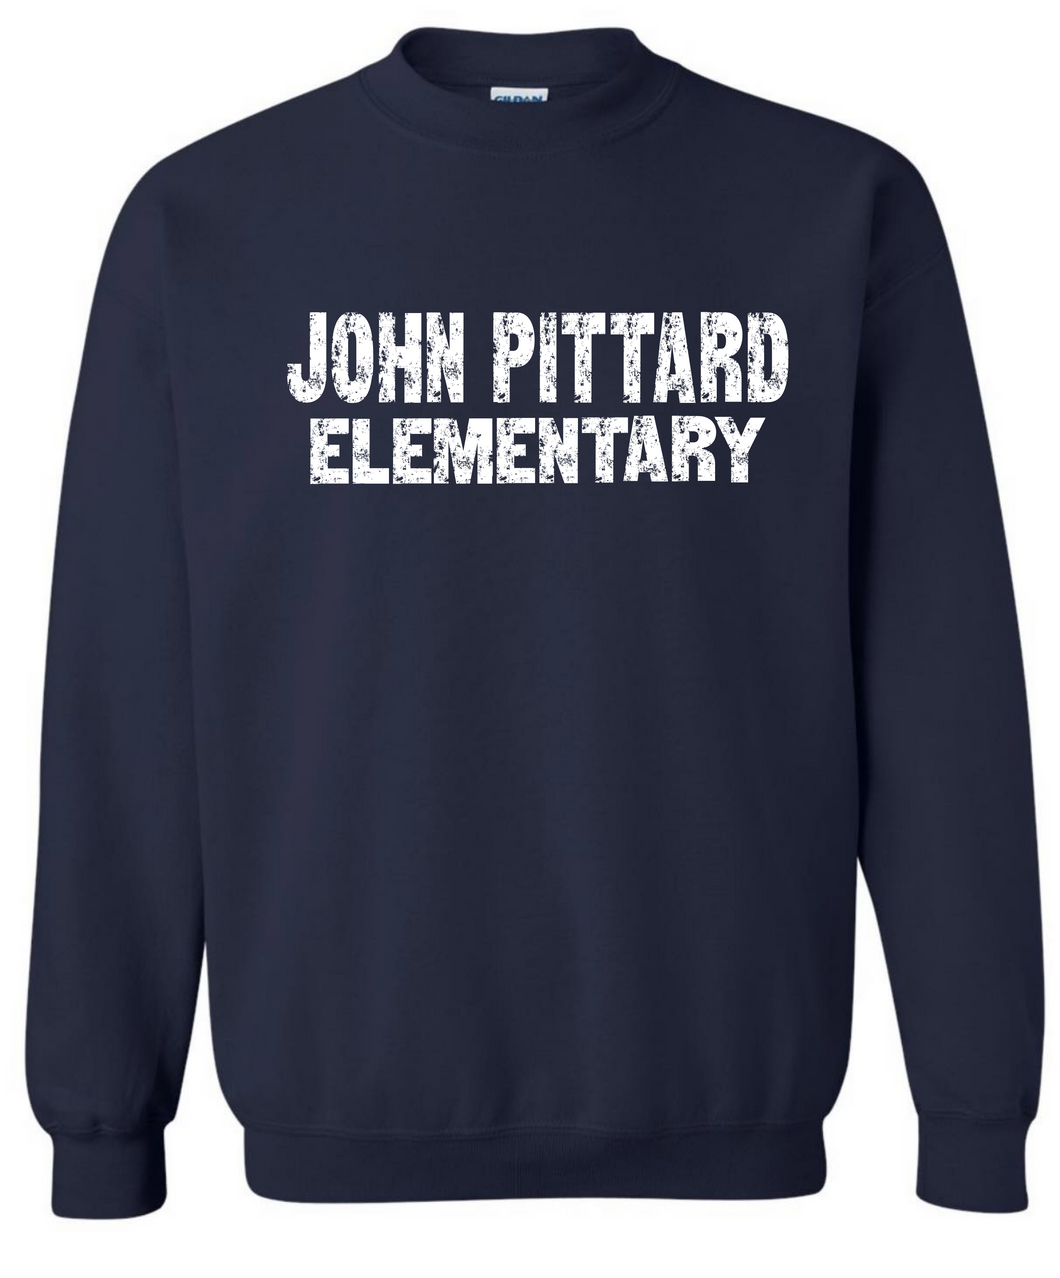 John Pittard Elementary Sweatshirt